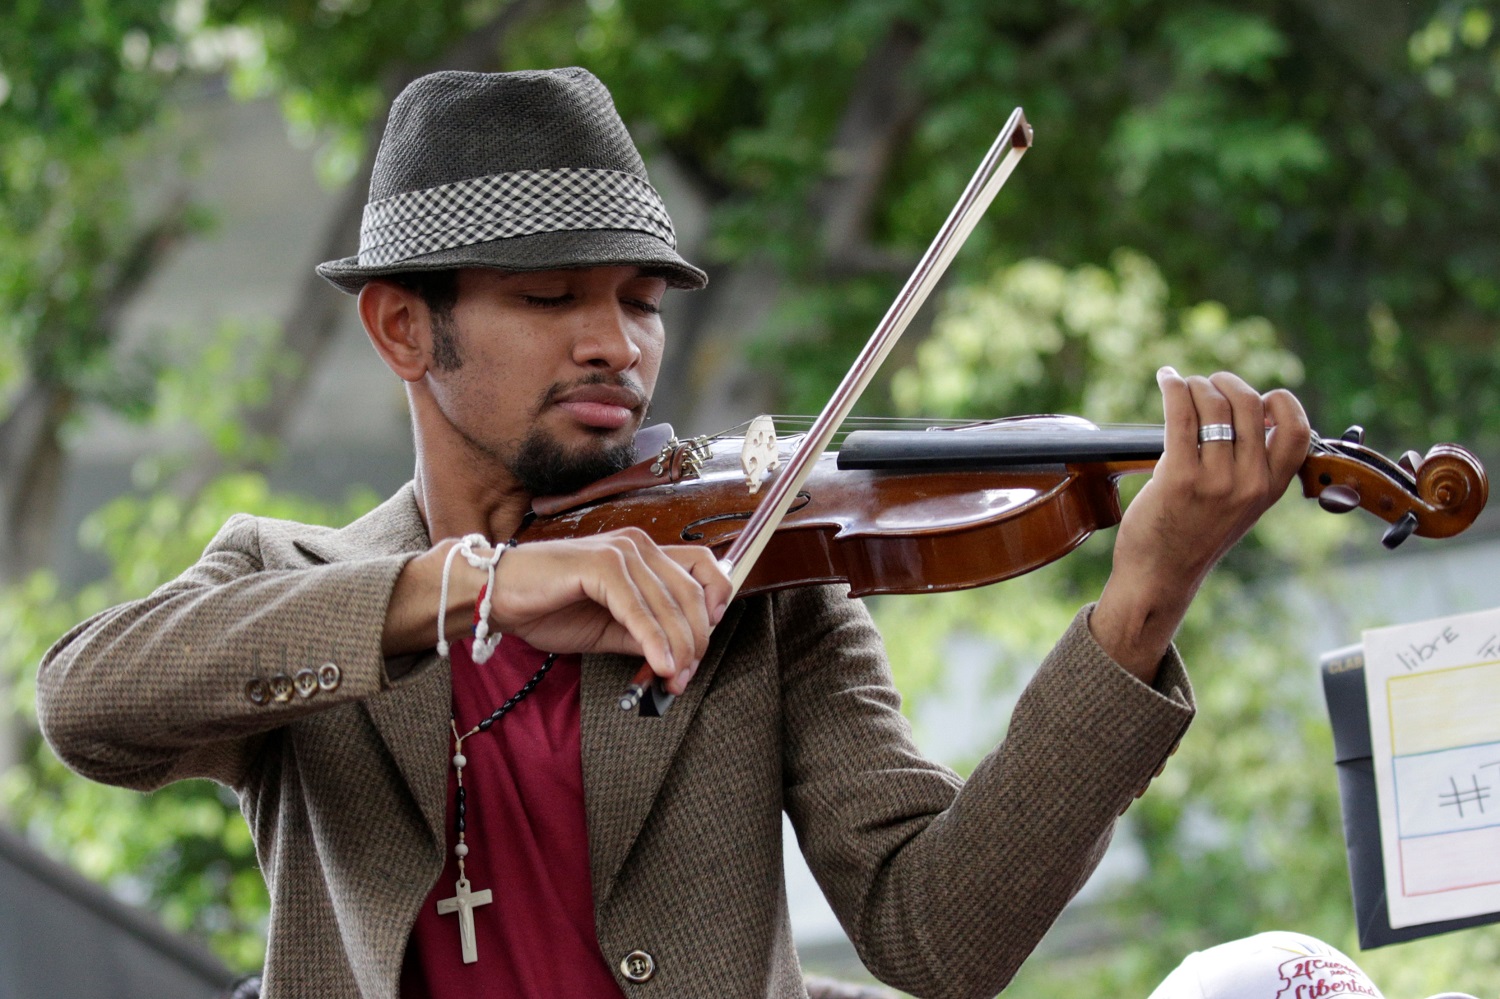 El “violinista libertario” tocó en Miraflores #5Jun